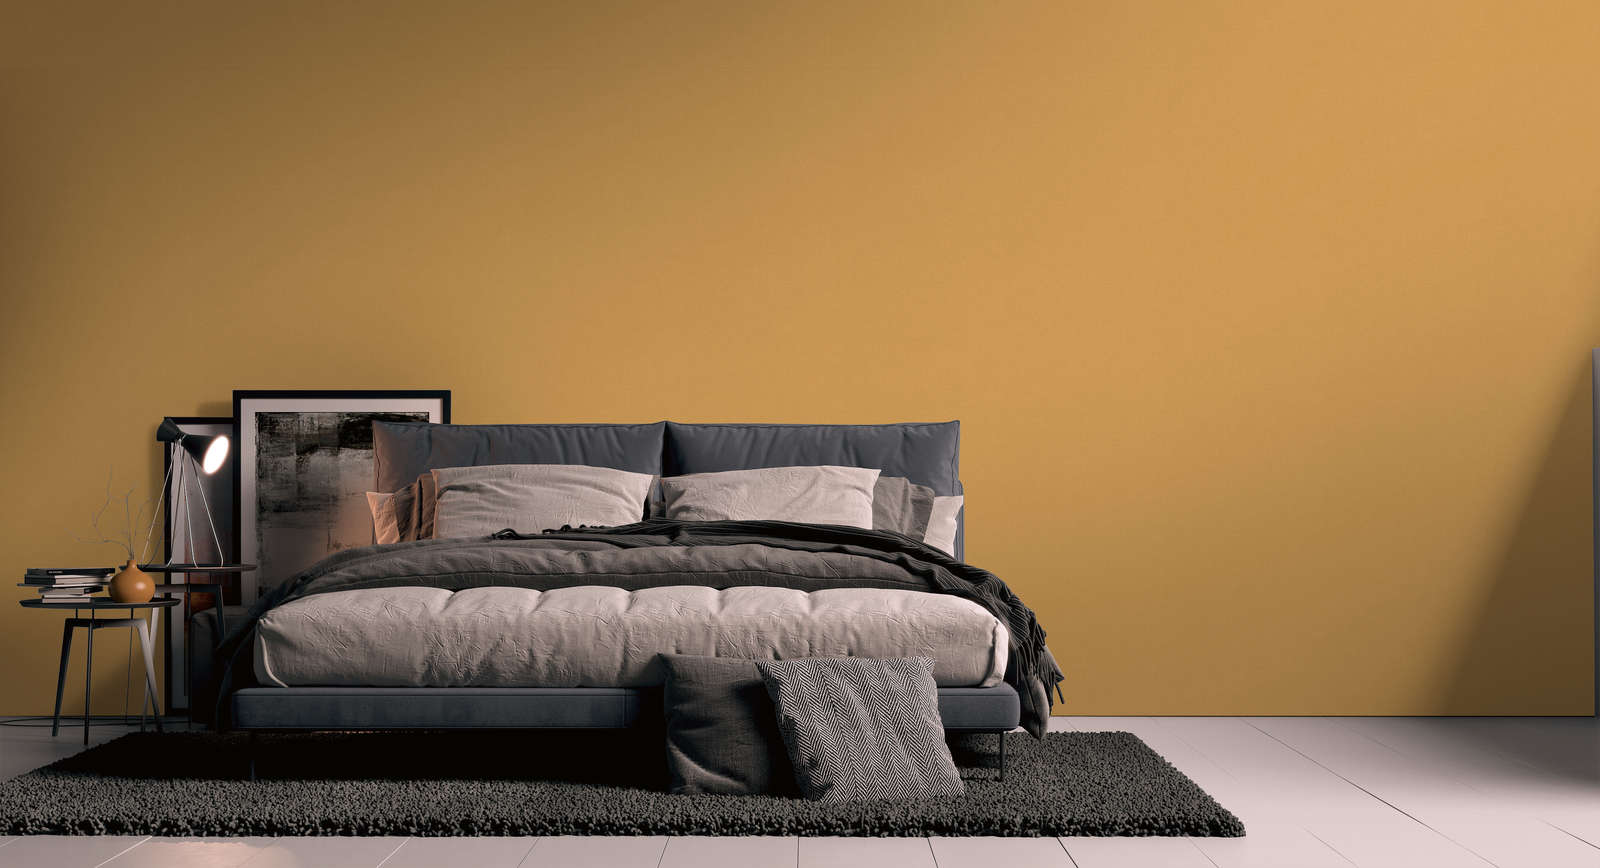             Plain non-woven wallpaper in bold colours - yellow
        